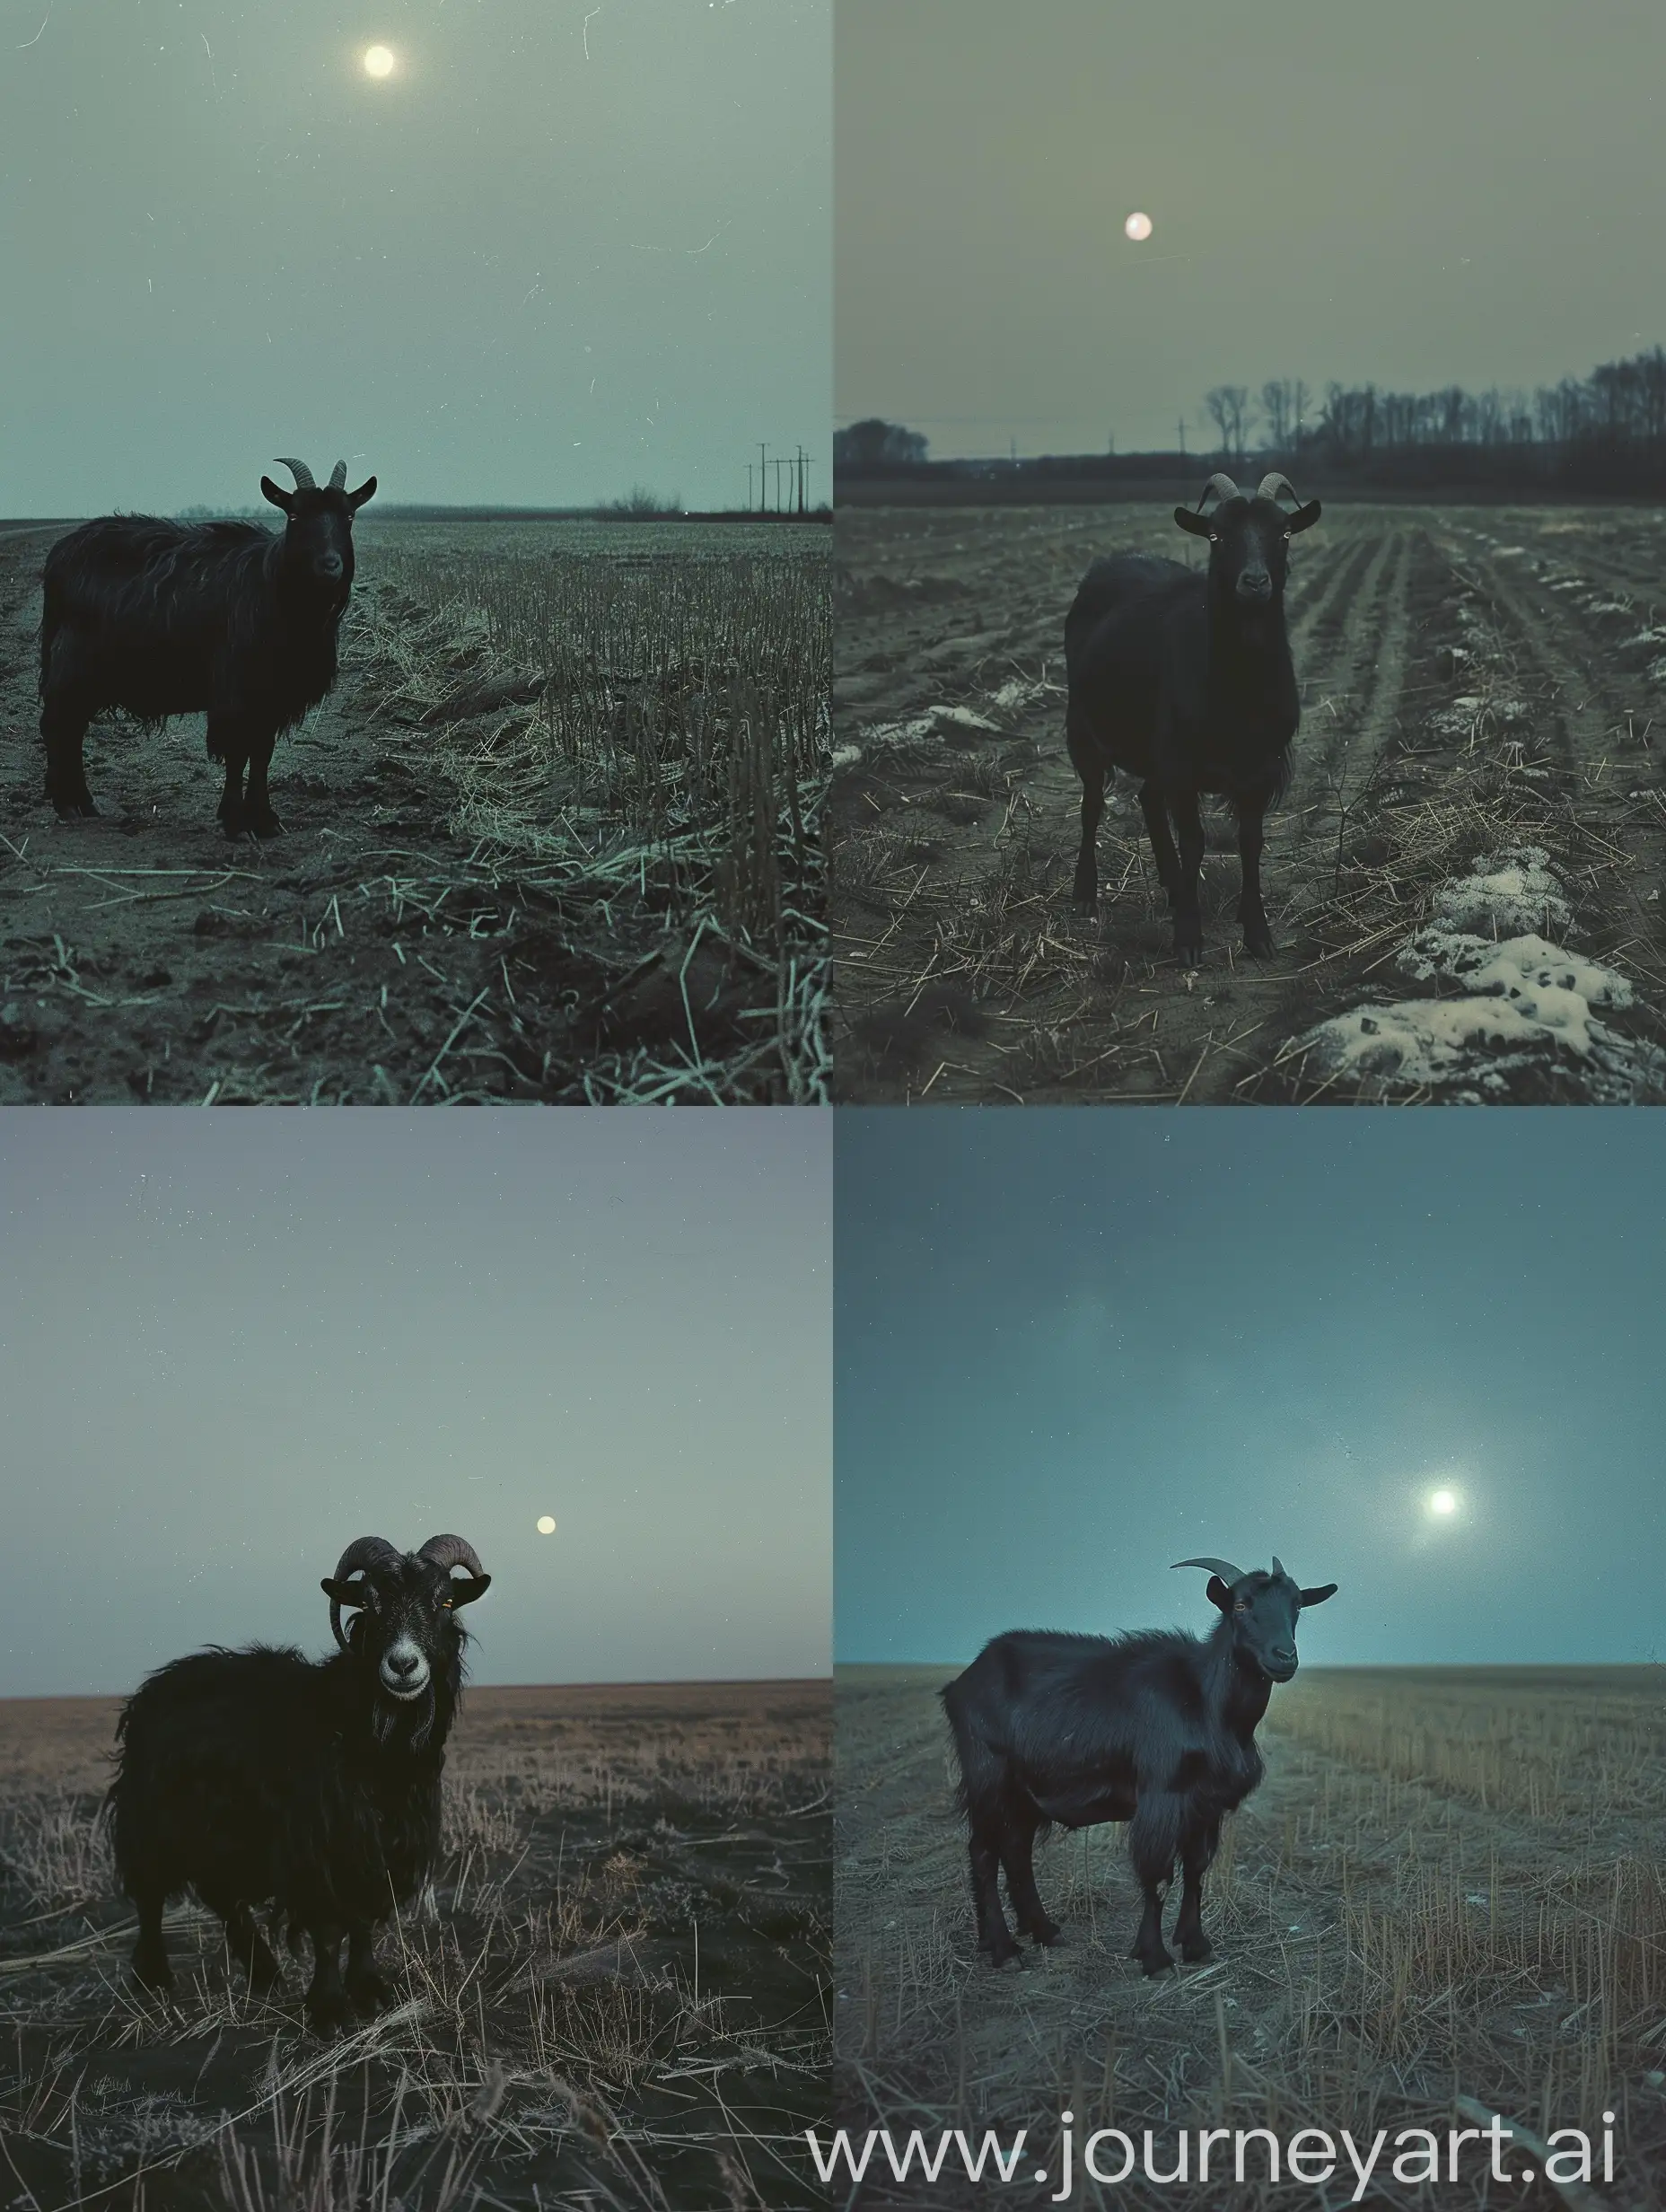 Eerie-Black-Goat-Haunting-Desolate-Moonlit-Field